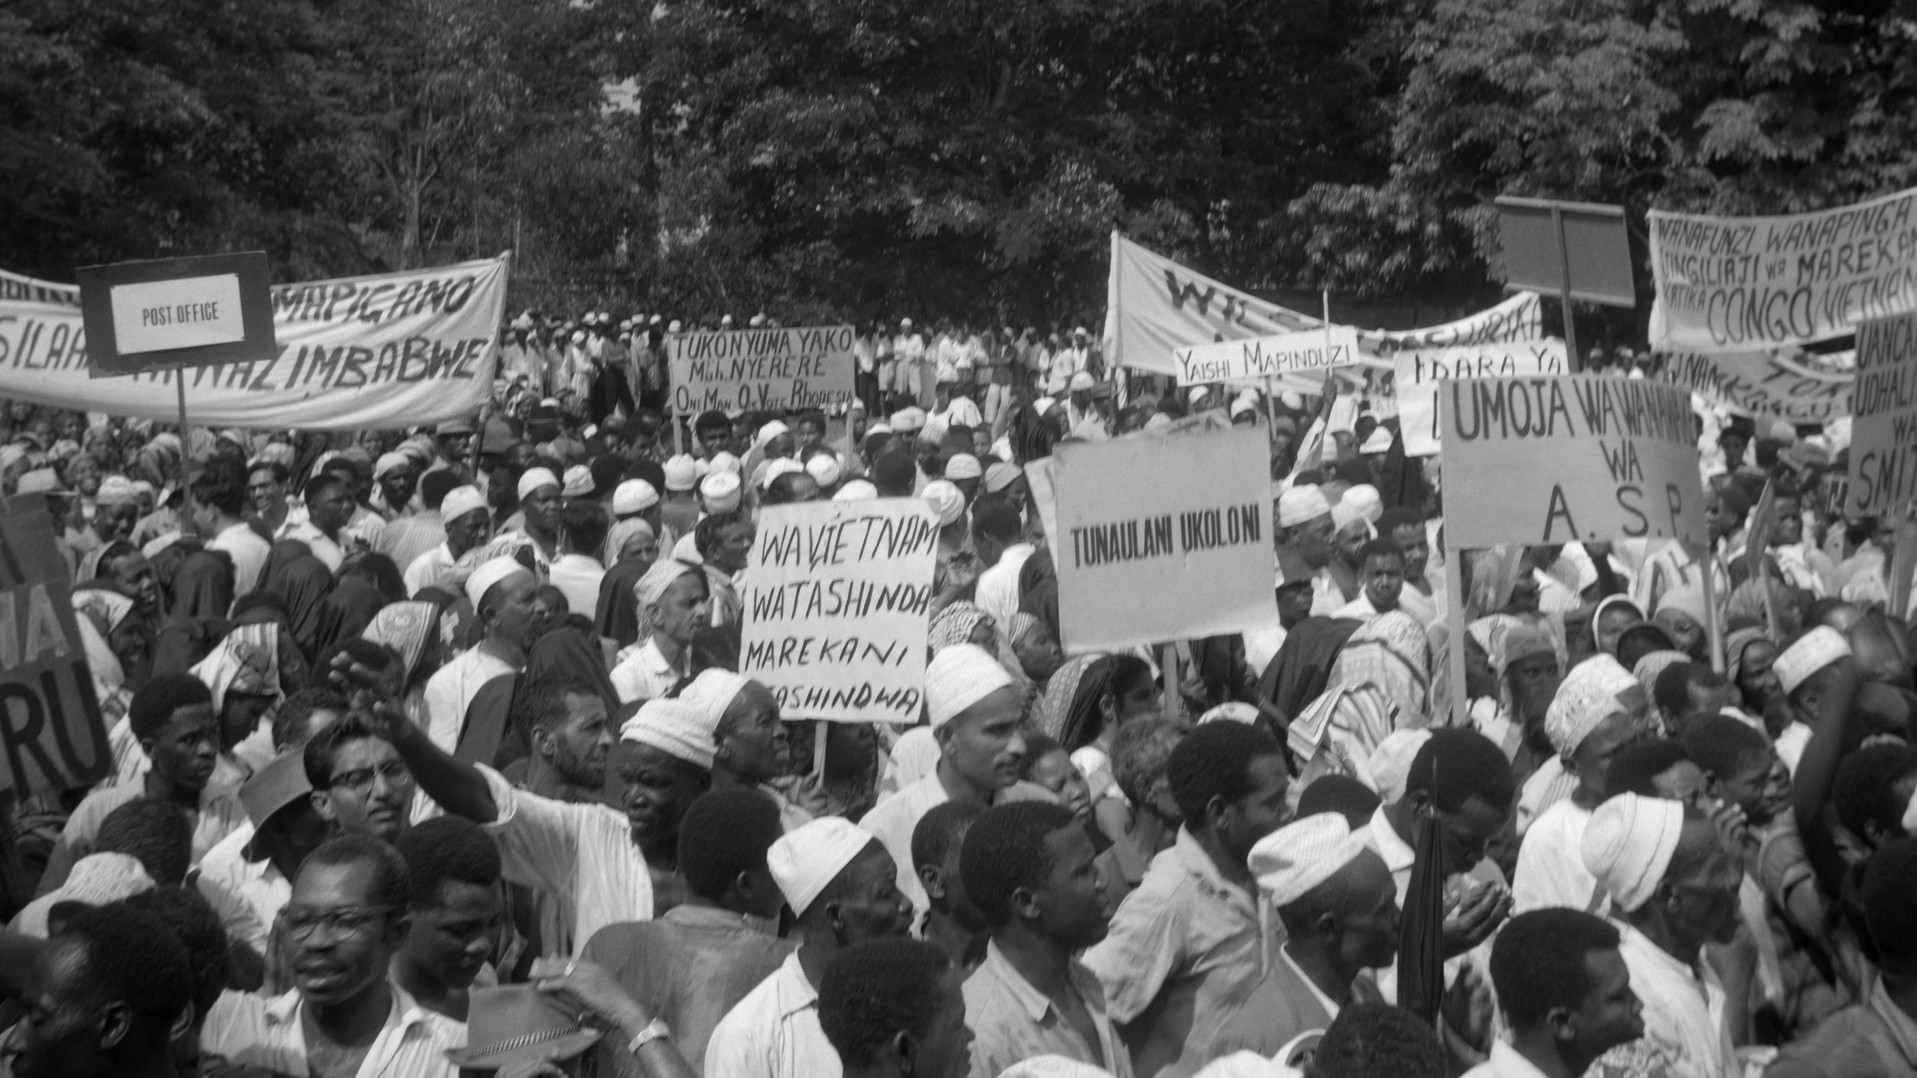 Protest against Rhodesia